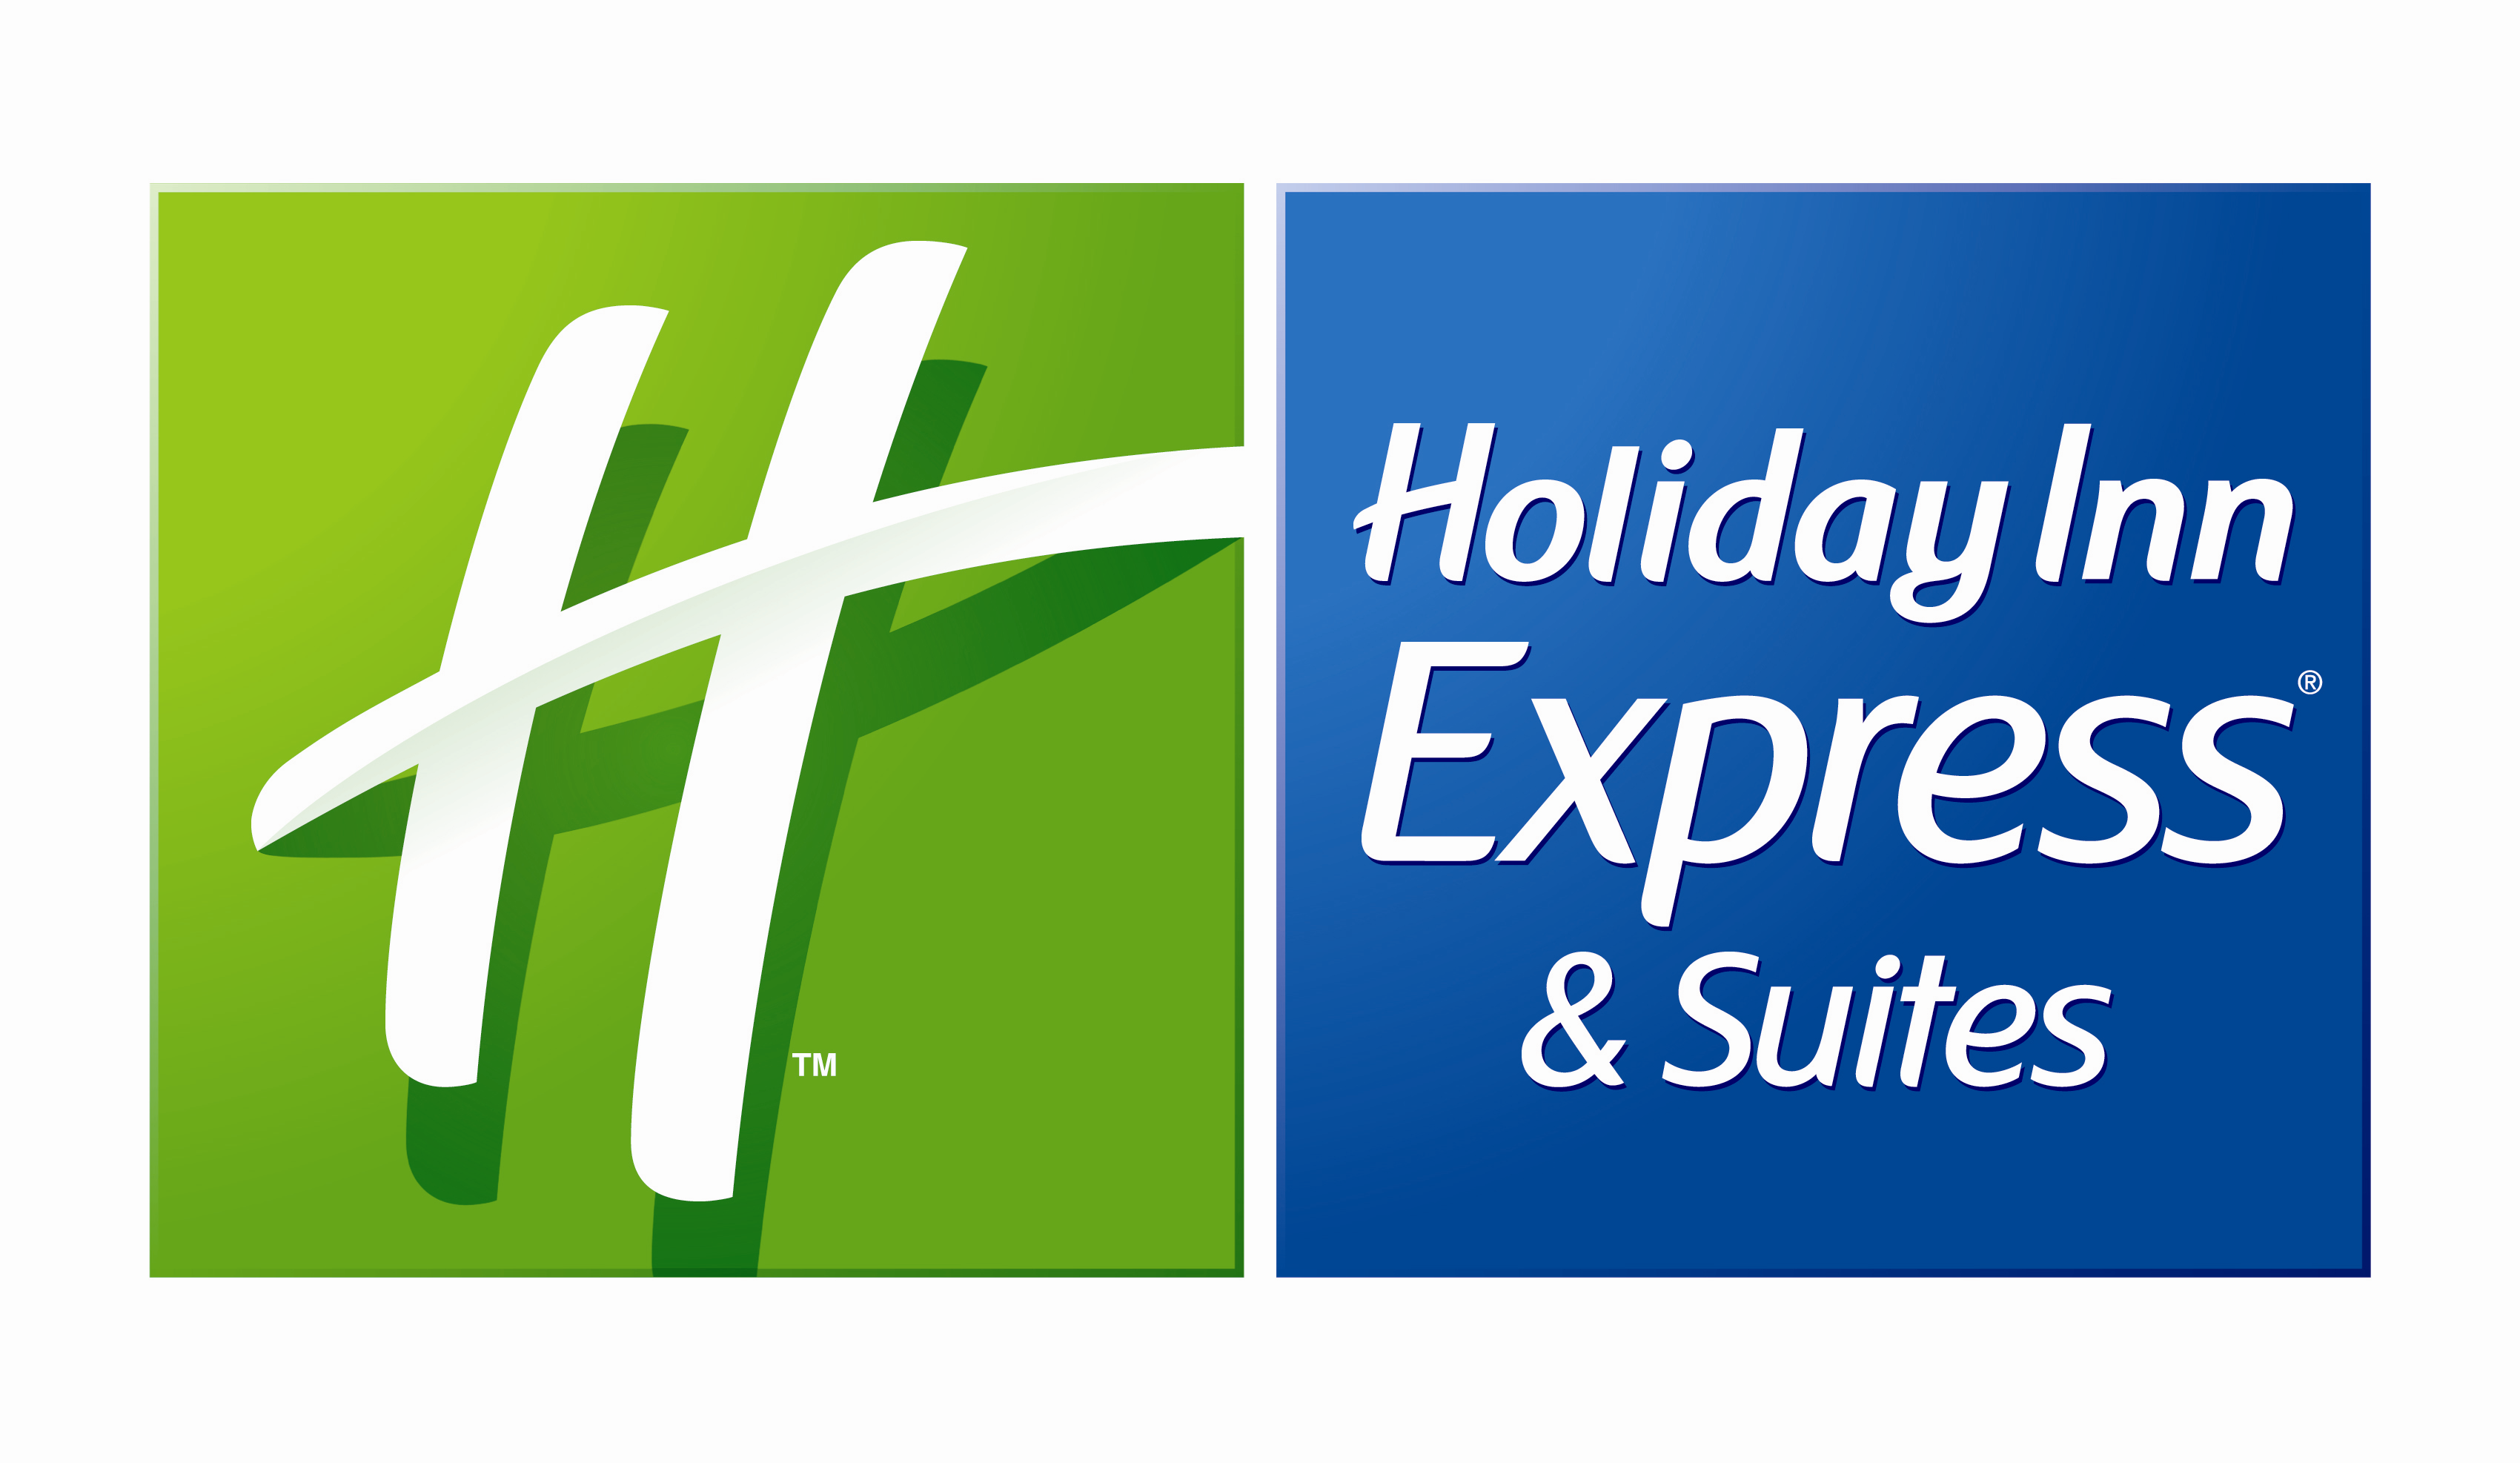 Holiday Inn Express (Central) logo